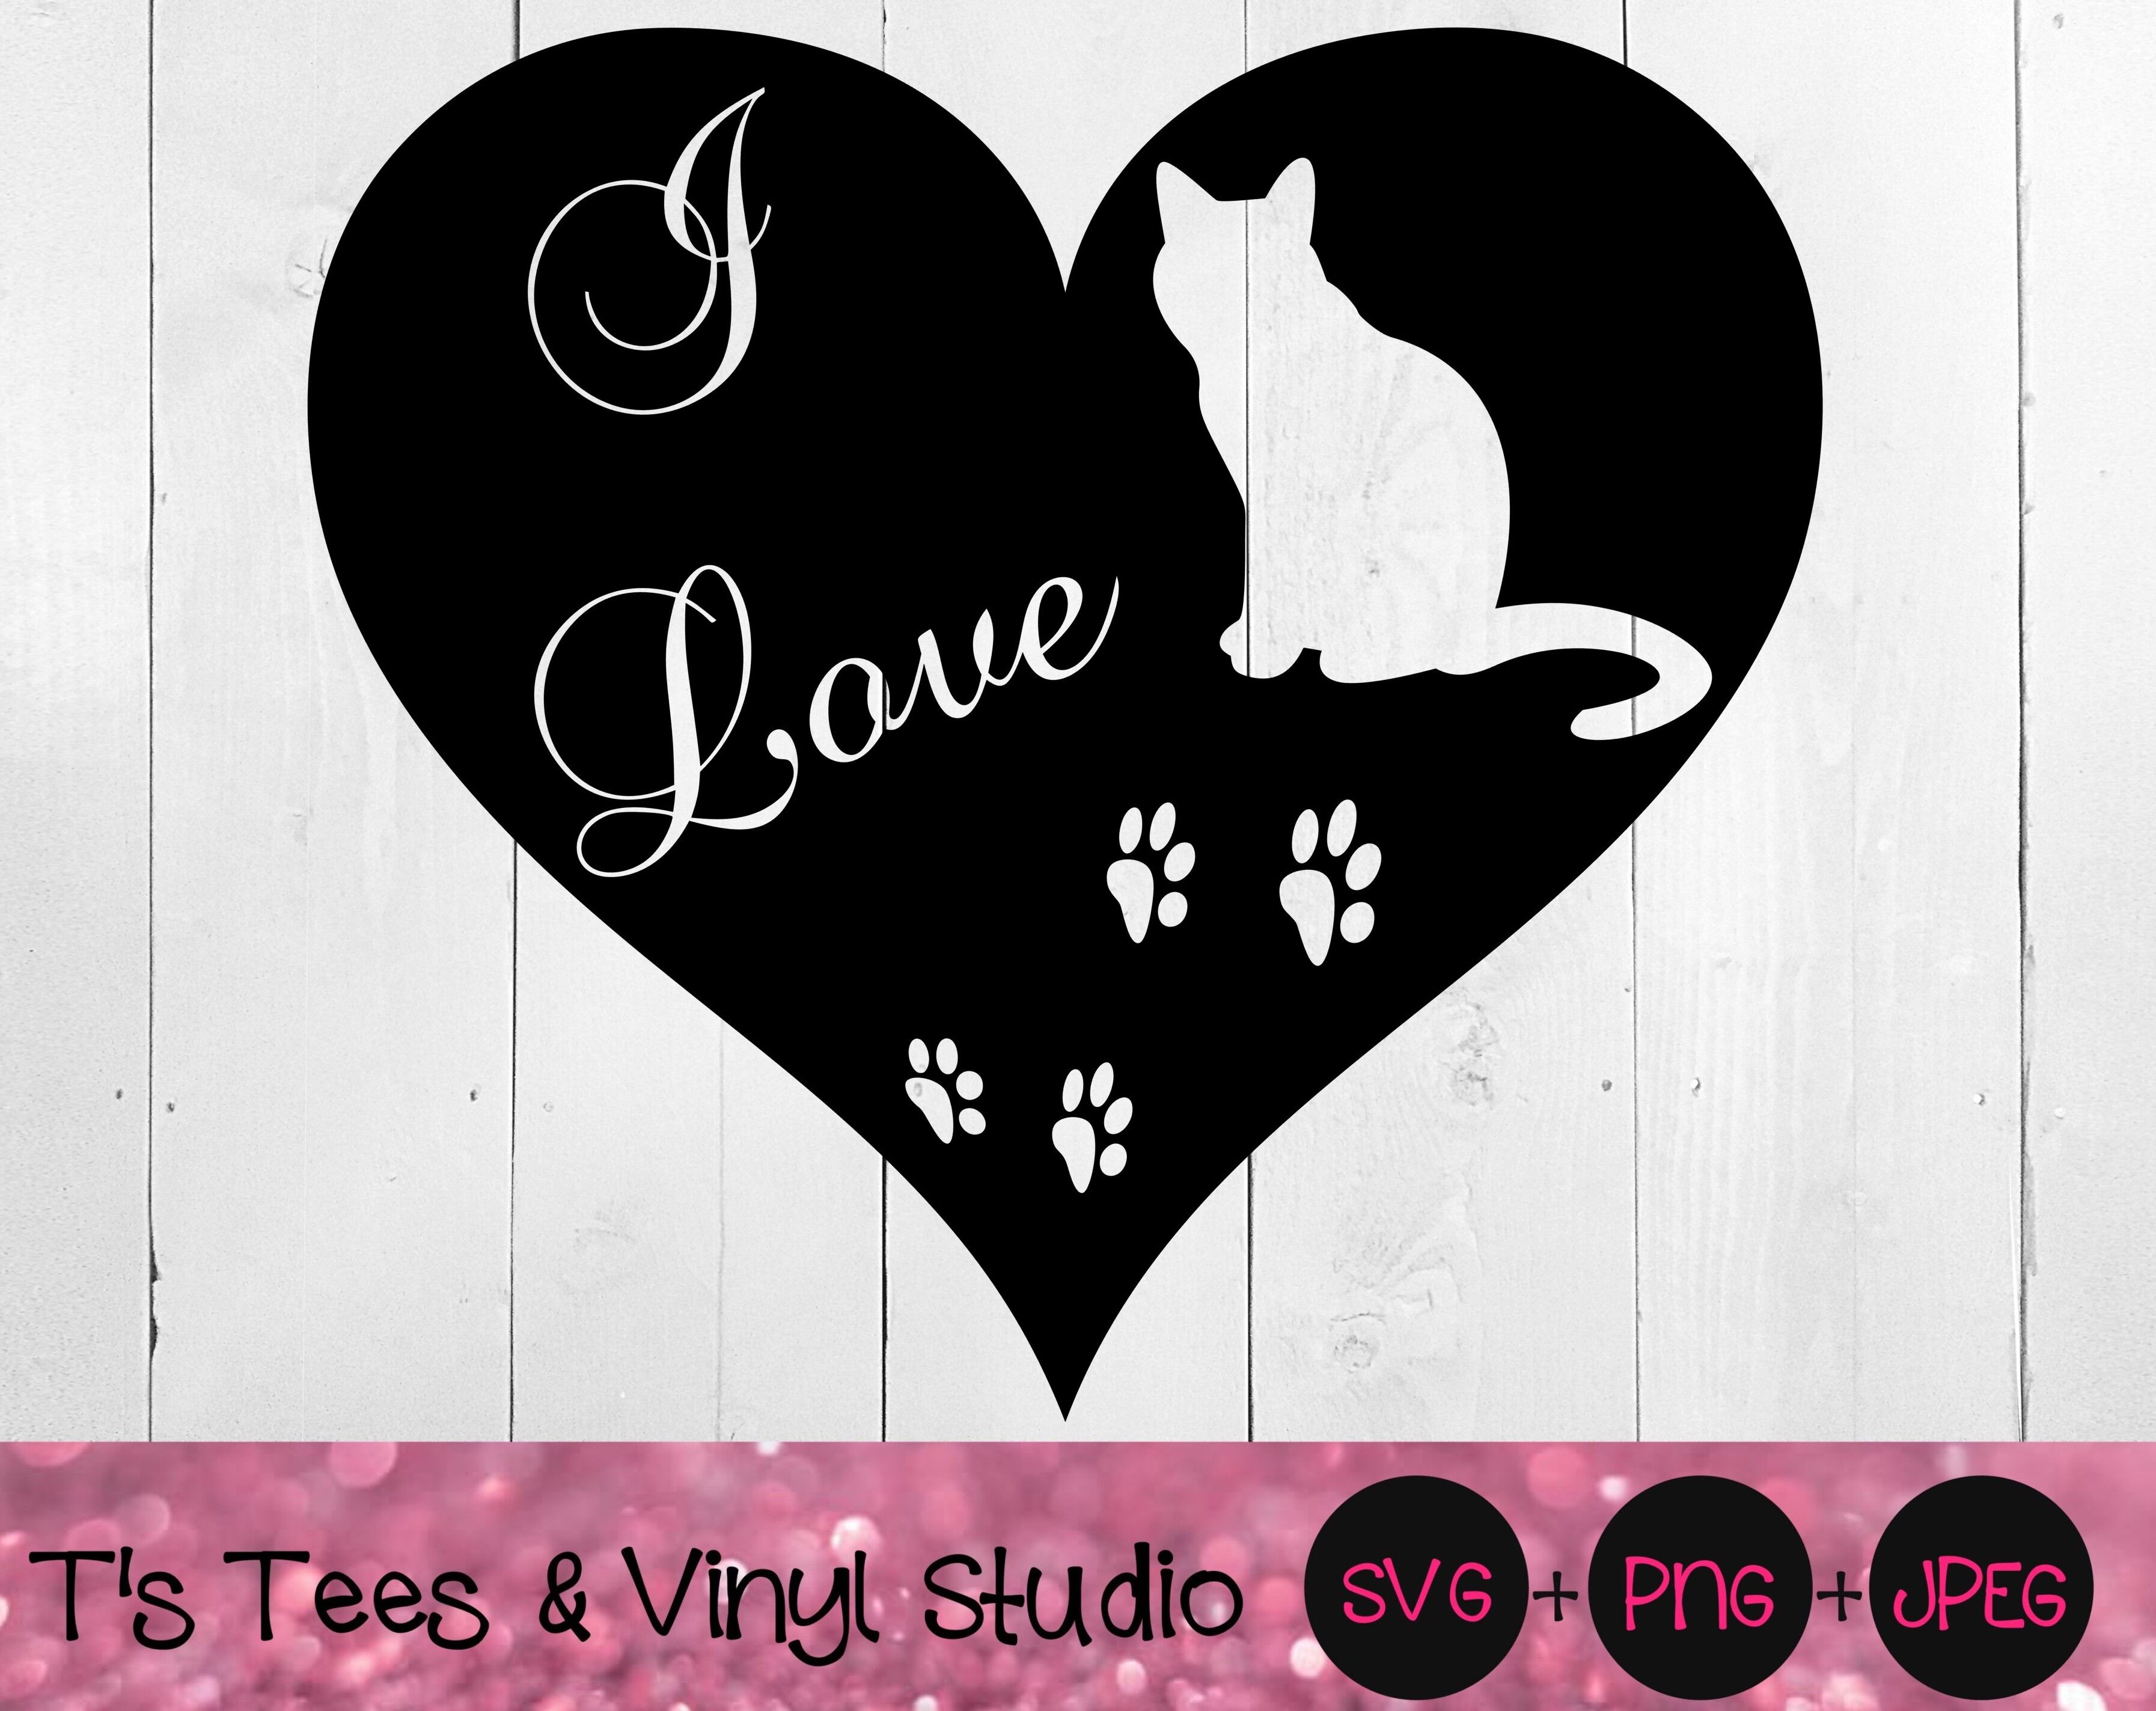 Download Cats Svg I Love Cats Svg Love Cats Svg Paw Print Svg Paw Prints Sv By T S Tees Vinyl Studio Thehungryjpeg Com